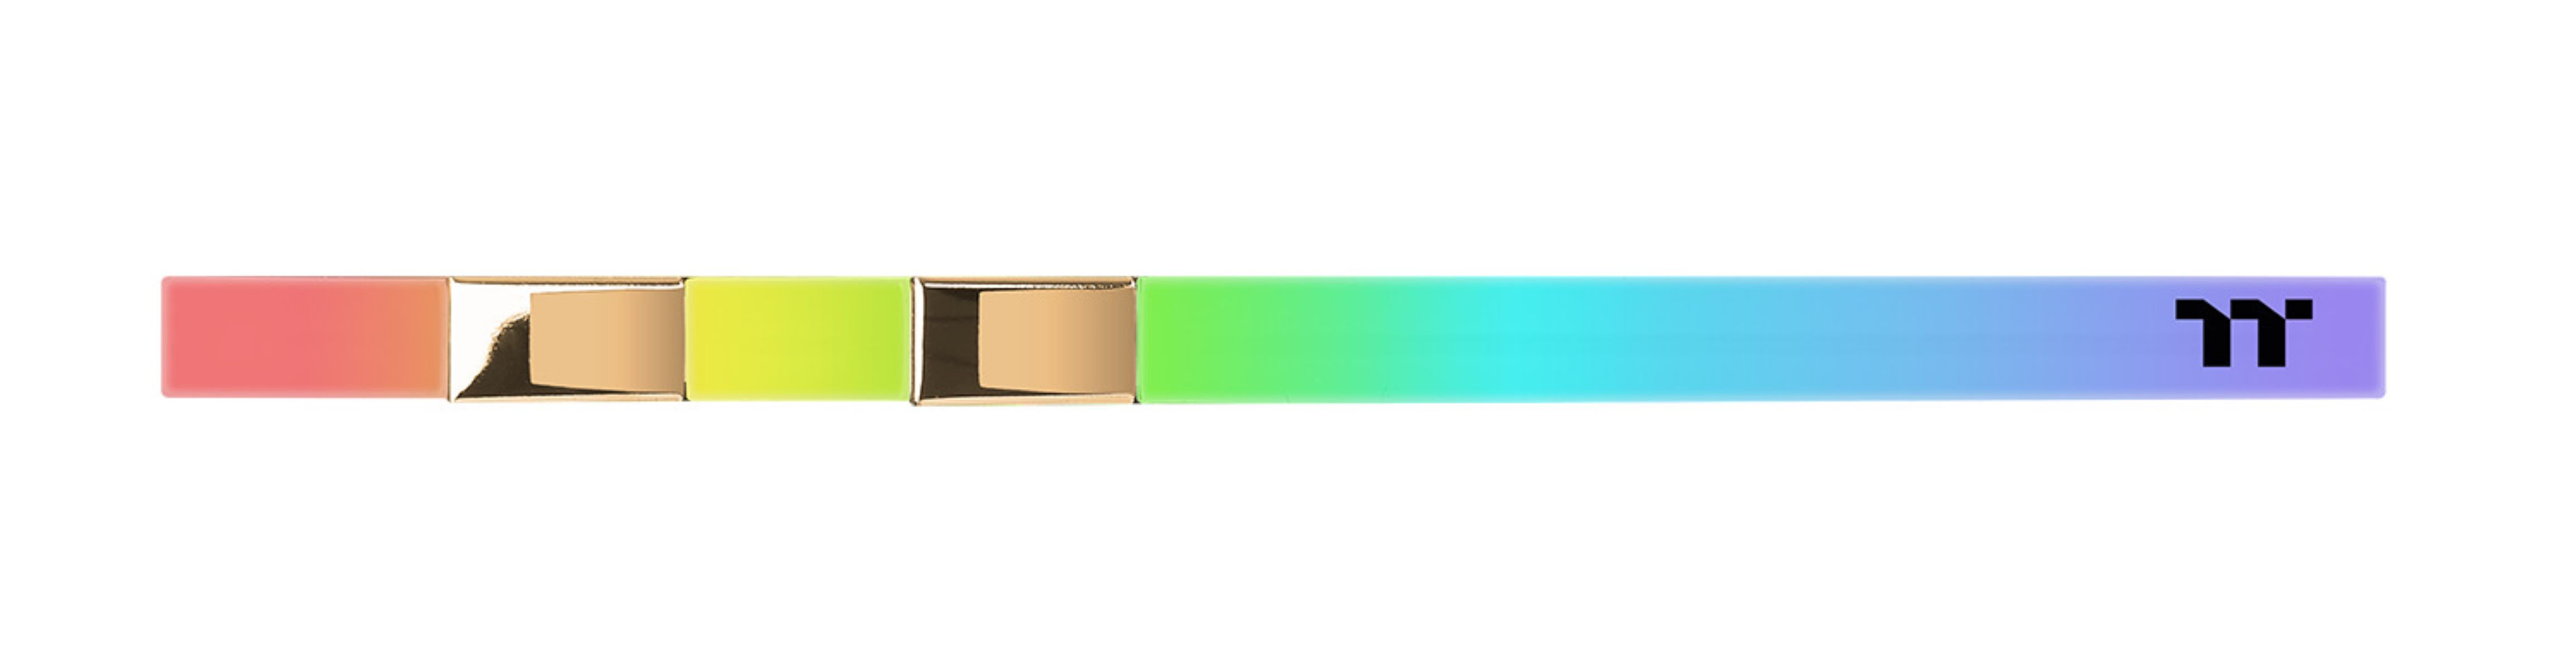 THERMALTAKE TOUGHRAM 16 Arbeitsspeicher Gold GB RGB Metallic DDR4